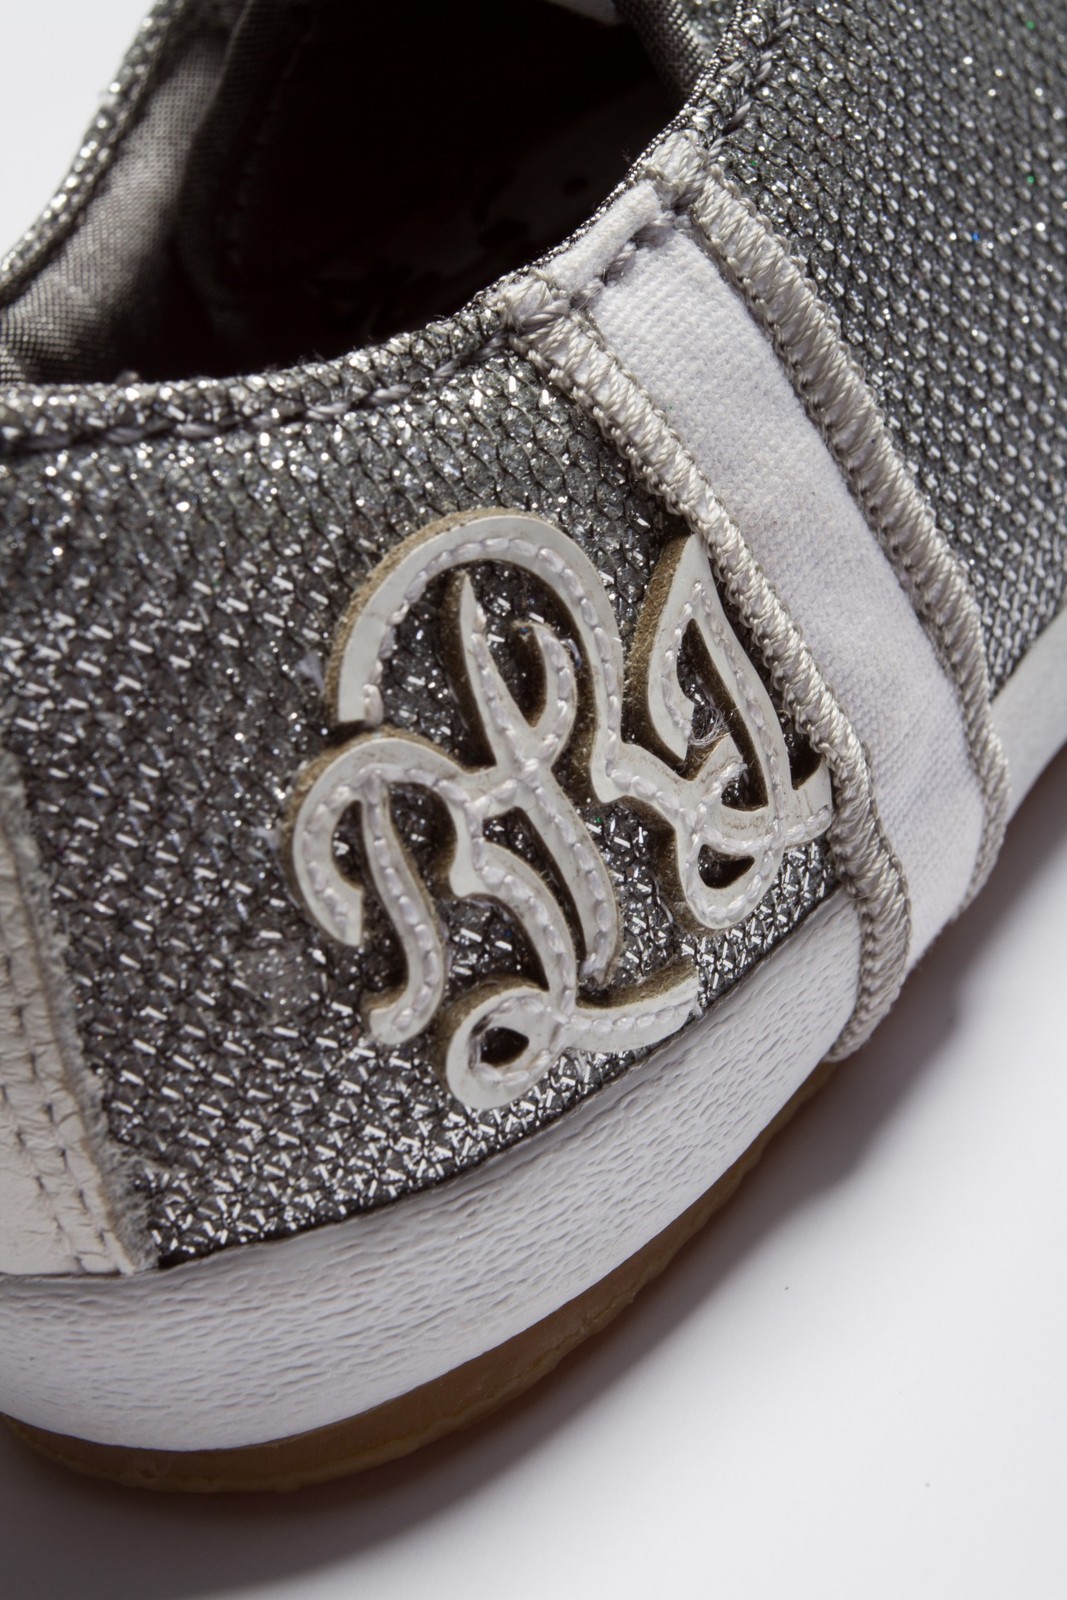 Replay szürke-ezüst tornacipő 2013.4.12 #39374 fotója